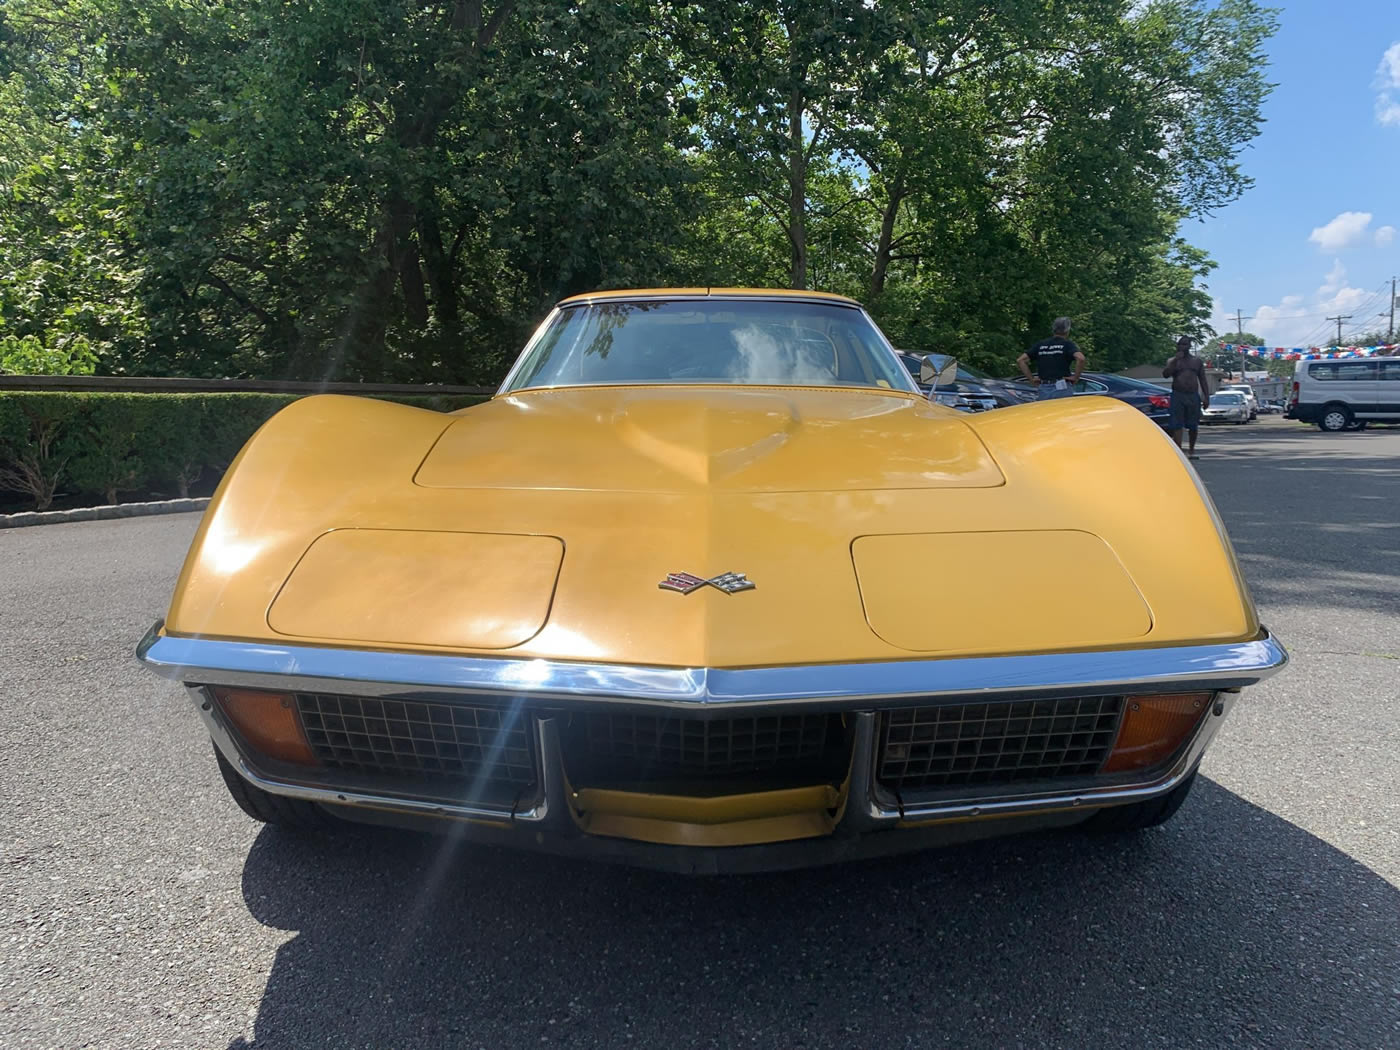 1972 Corvette Coupe in War Bonnet Yellow